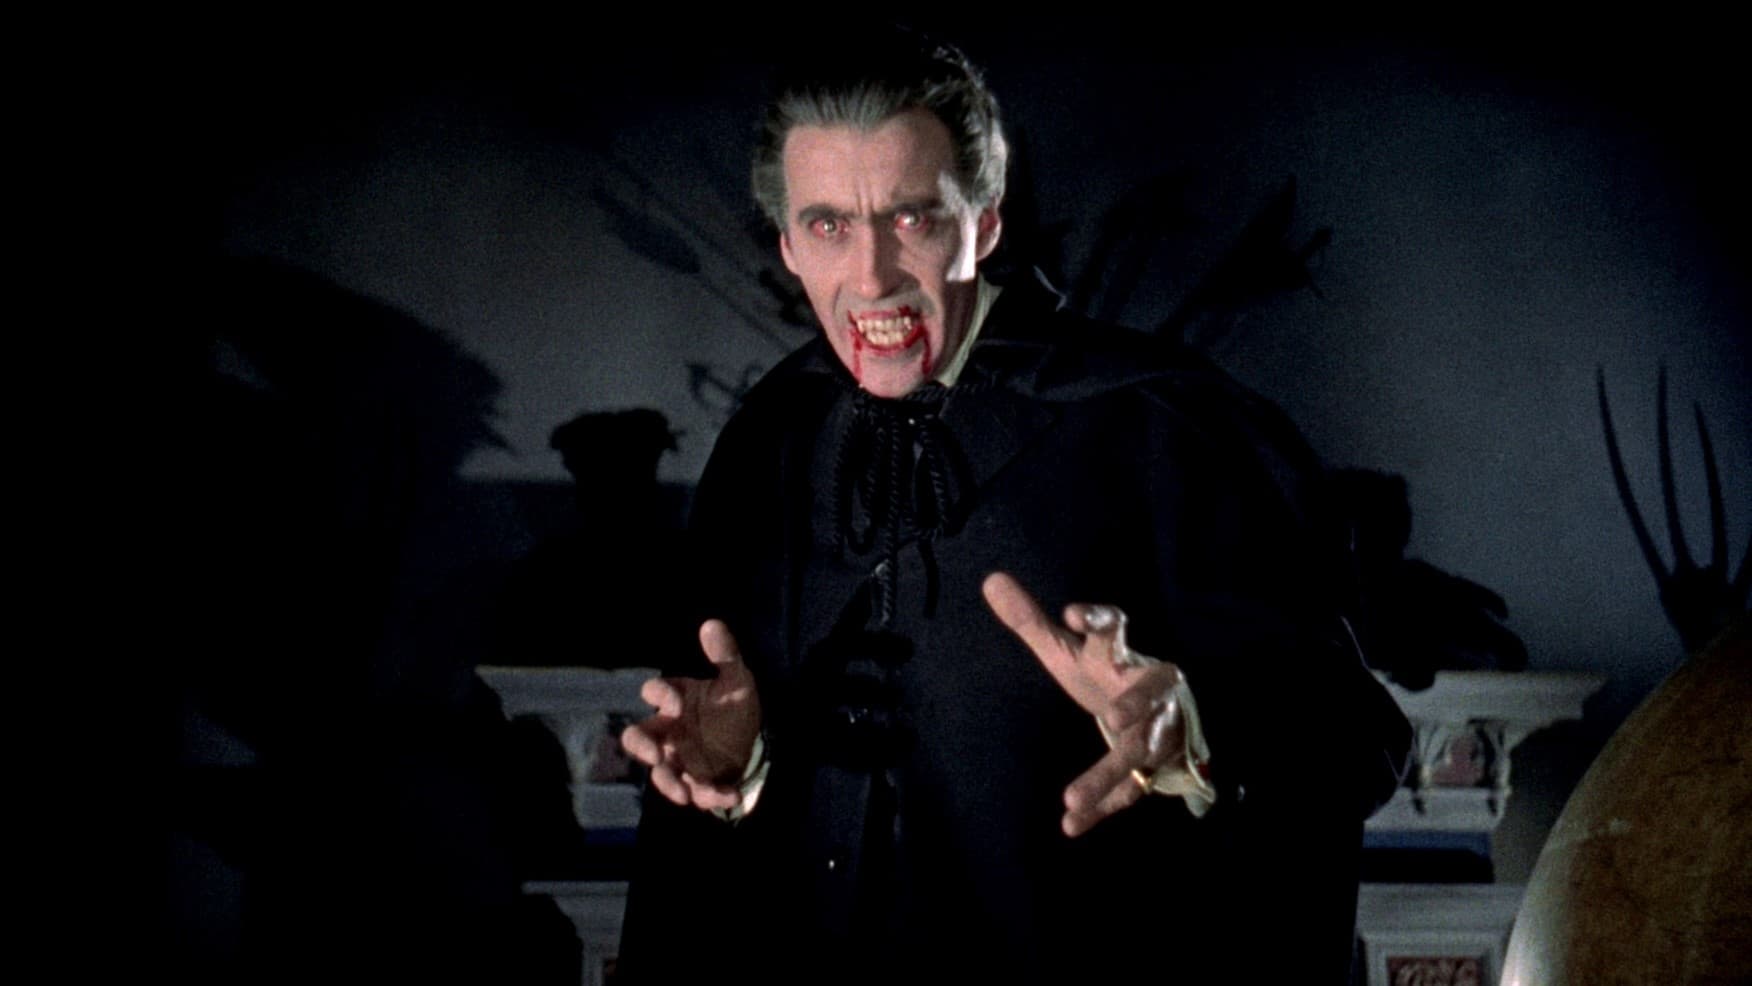 Dracula (1958)